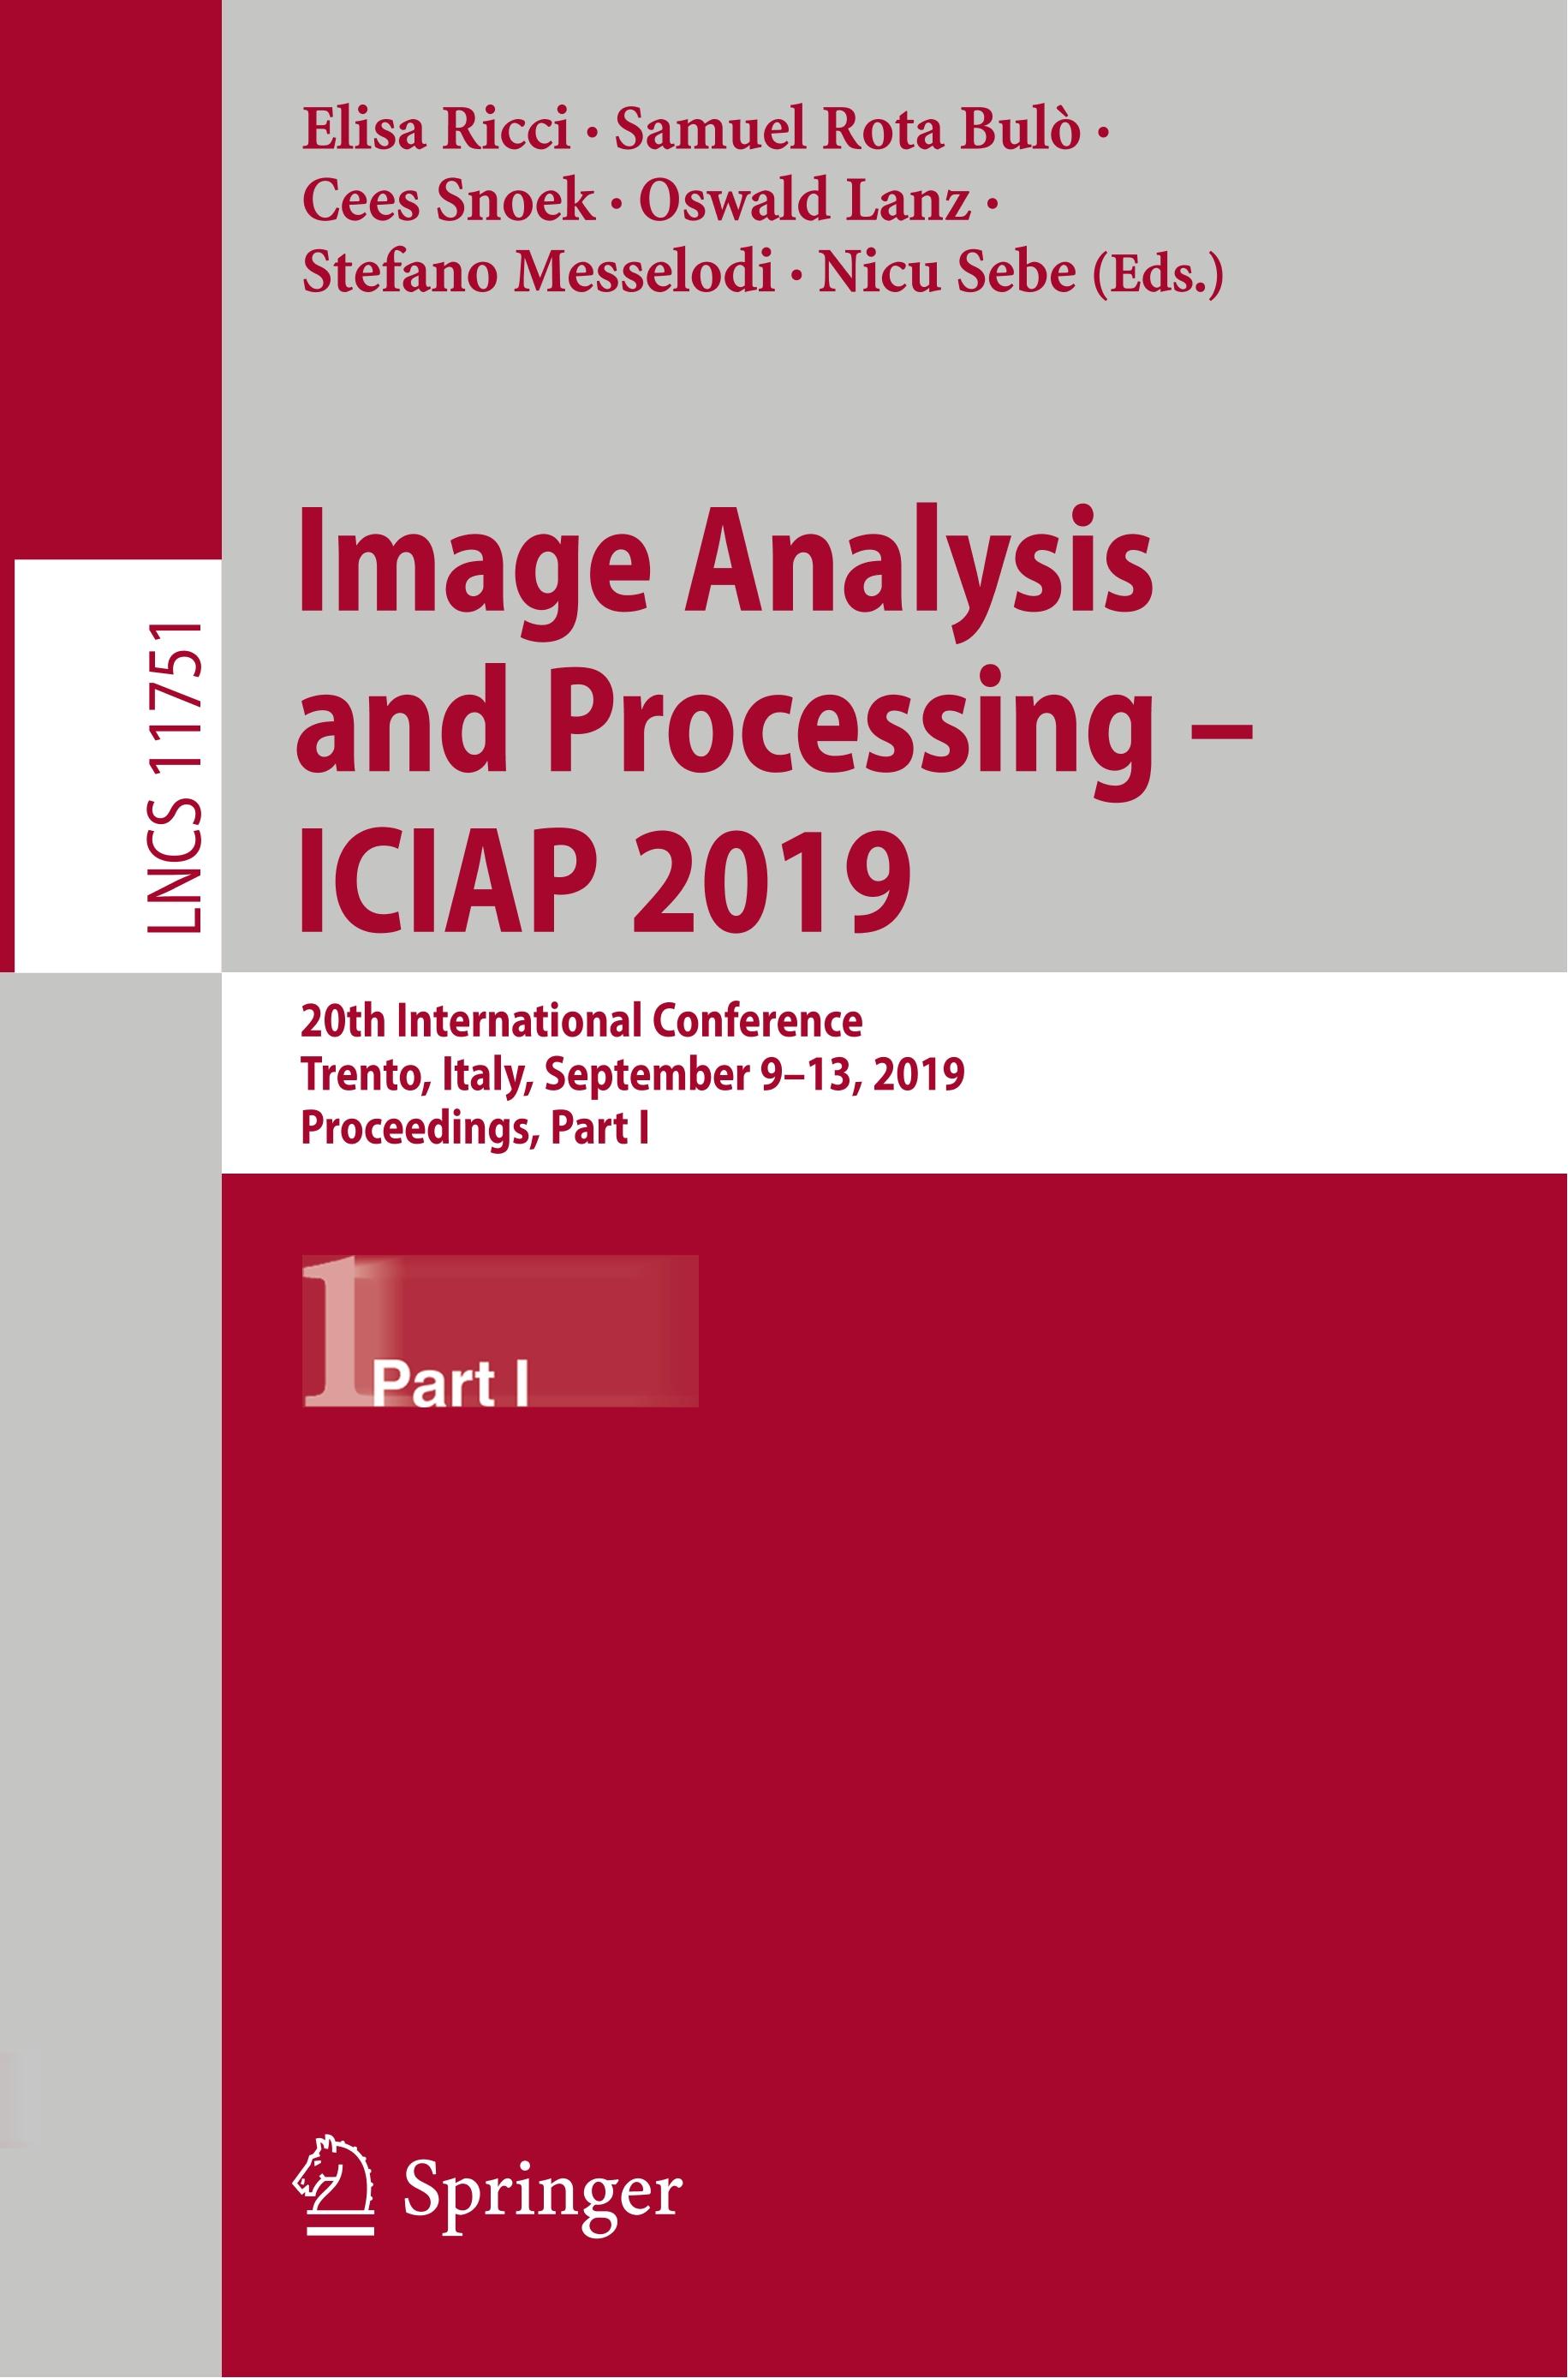 Image Analysis and Processing - ICIAP 2019 - Ricci, Elisa|Rota BulÃ², Samuel|Snoek, Cees|Lanz, Oswald|Messelodi, Stefano|Sebe, Nicu